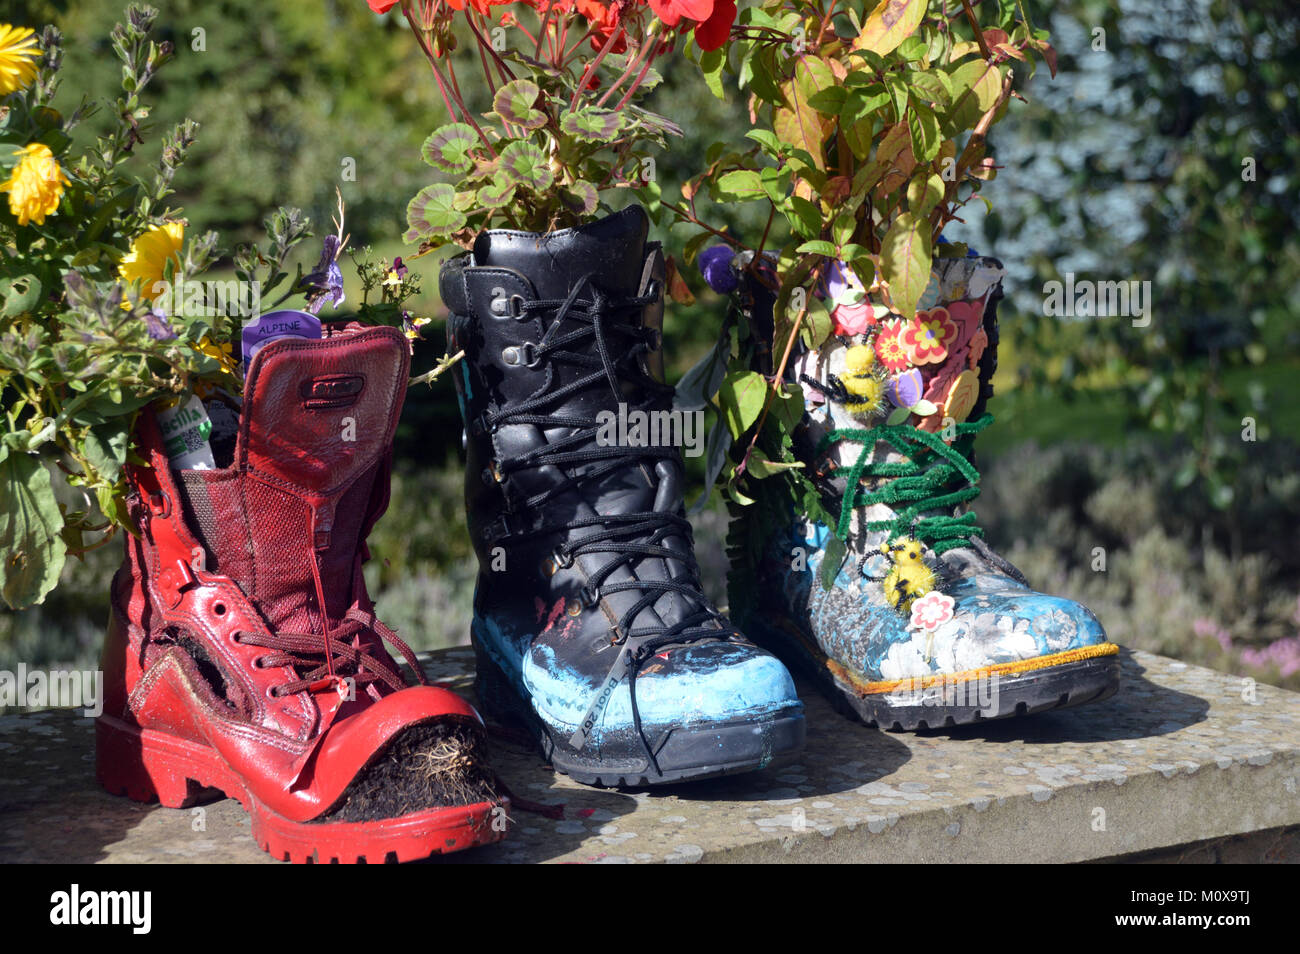 Recycled boots -Fotos und -Bildmaterial in hoher Auflösung – Alamy